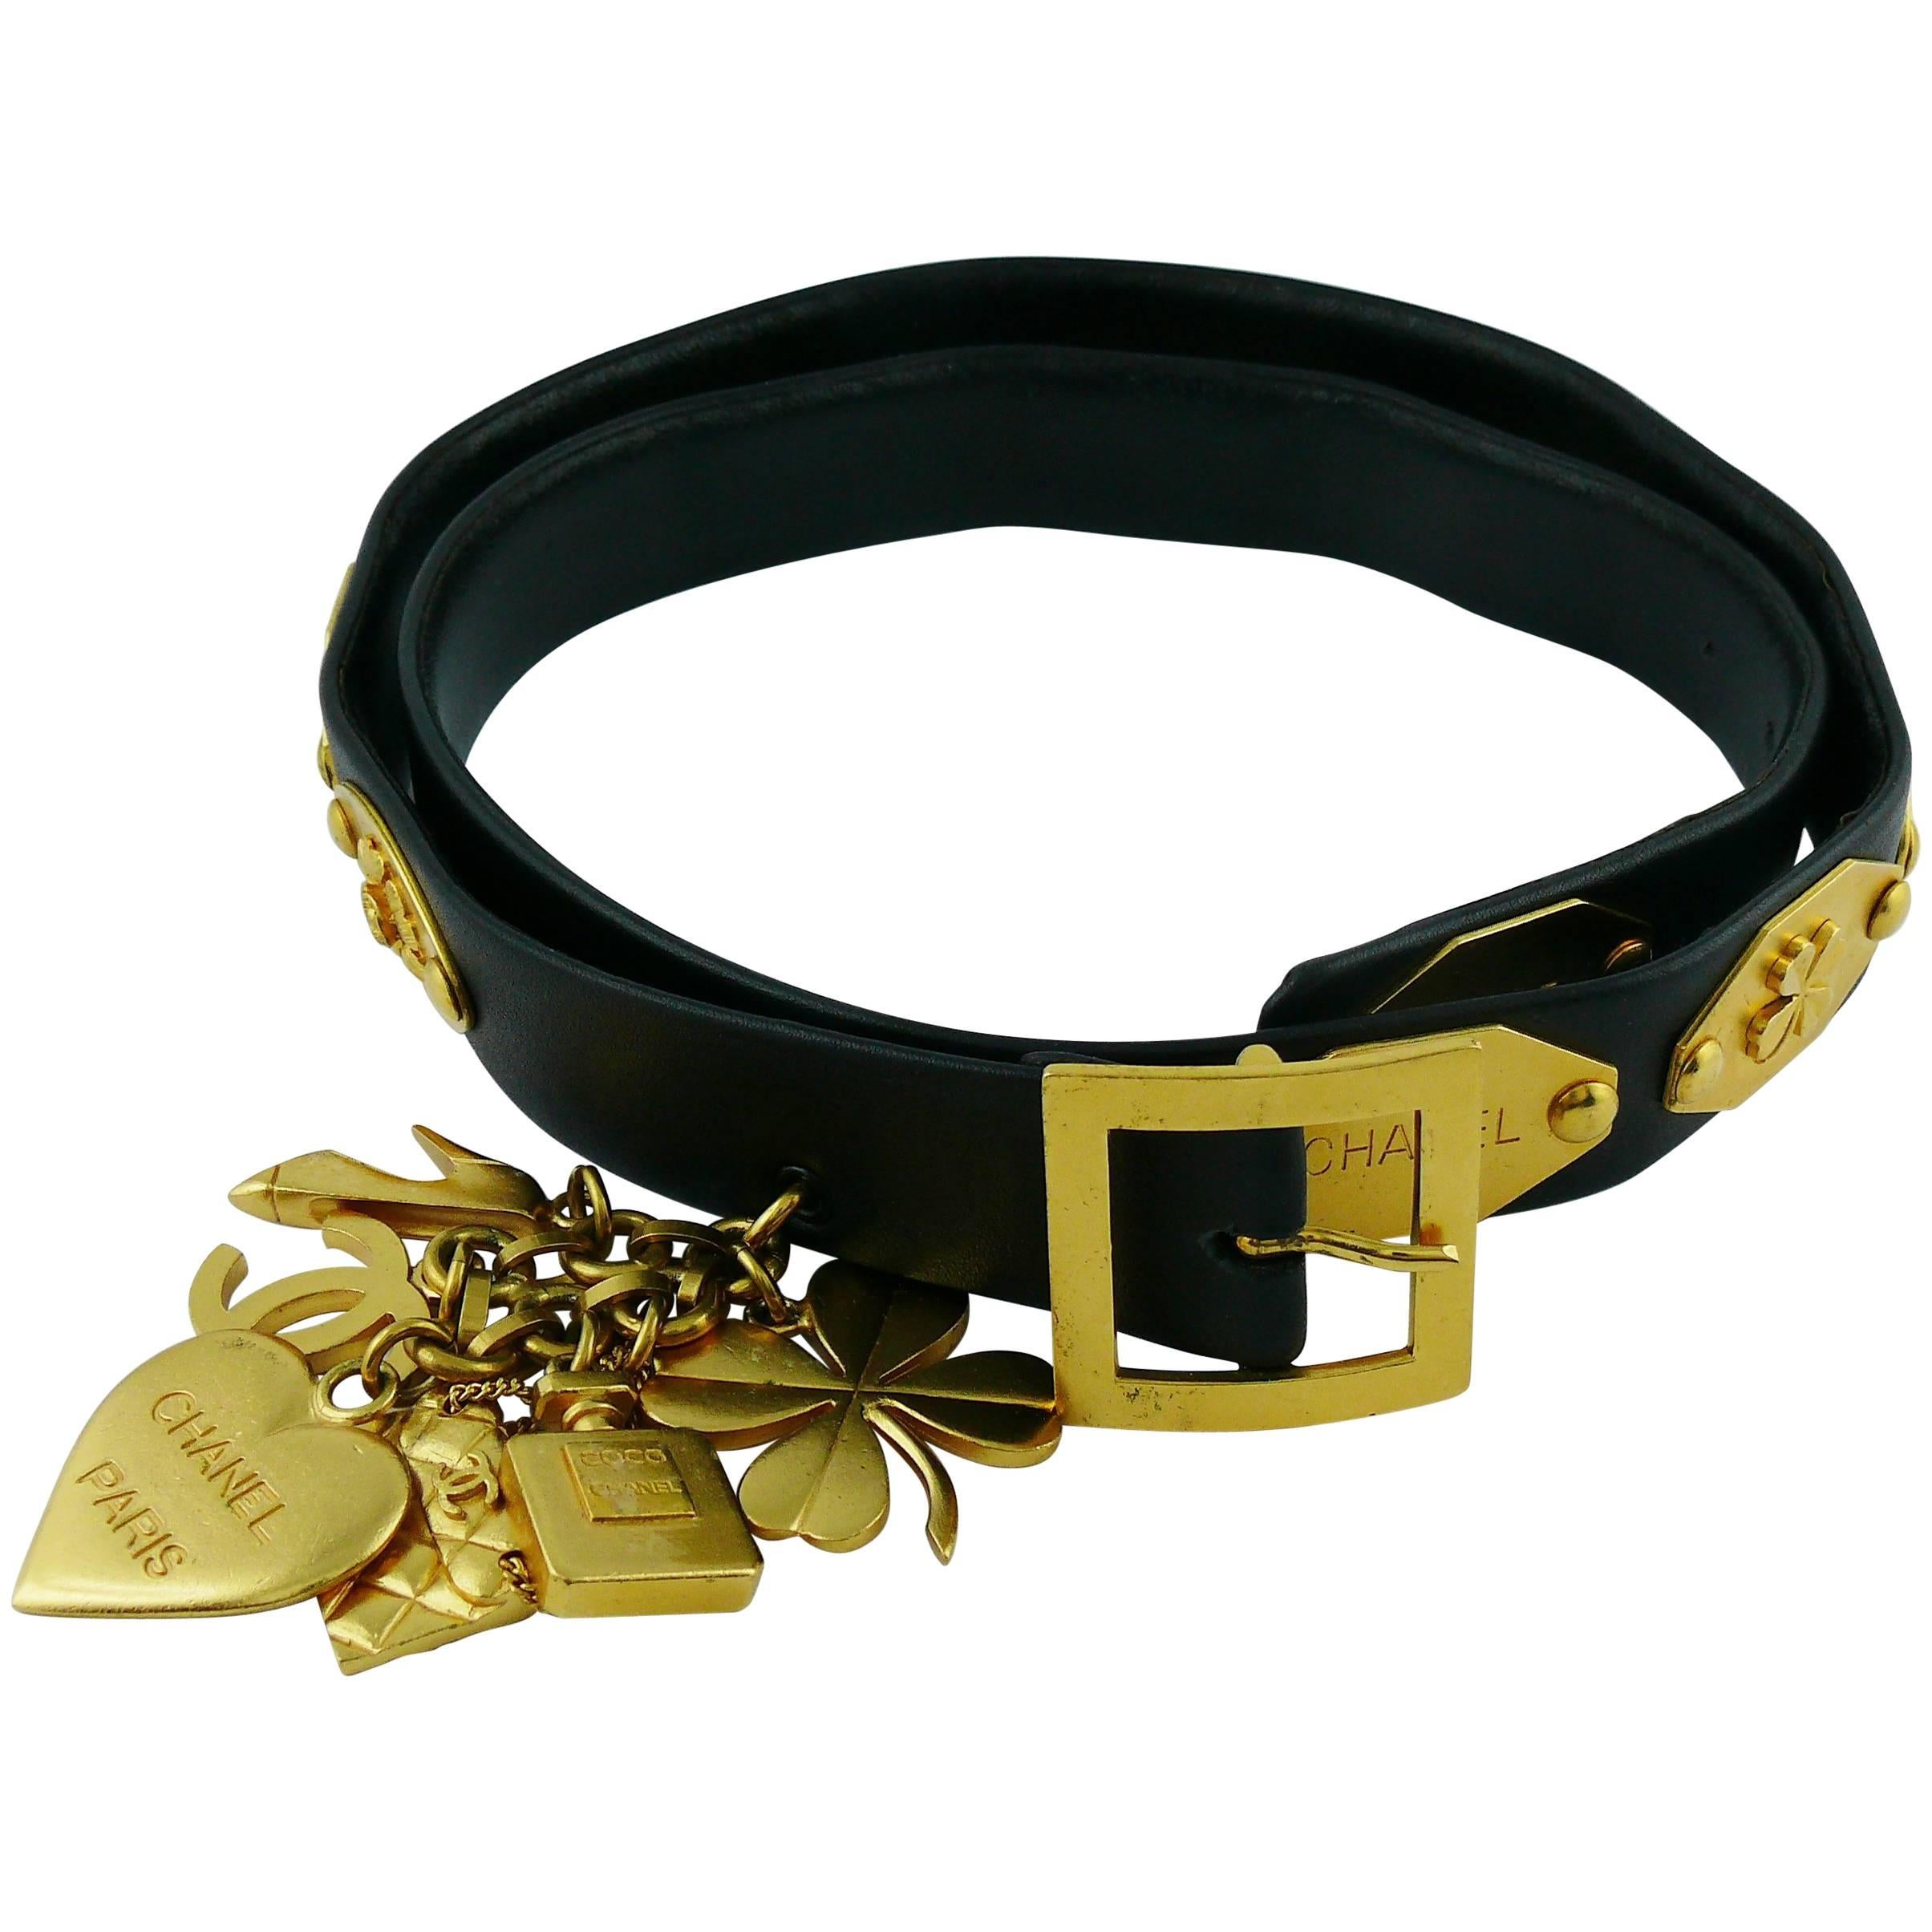 Chanel Black Leather Buckle Belt 95CM Chanel